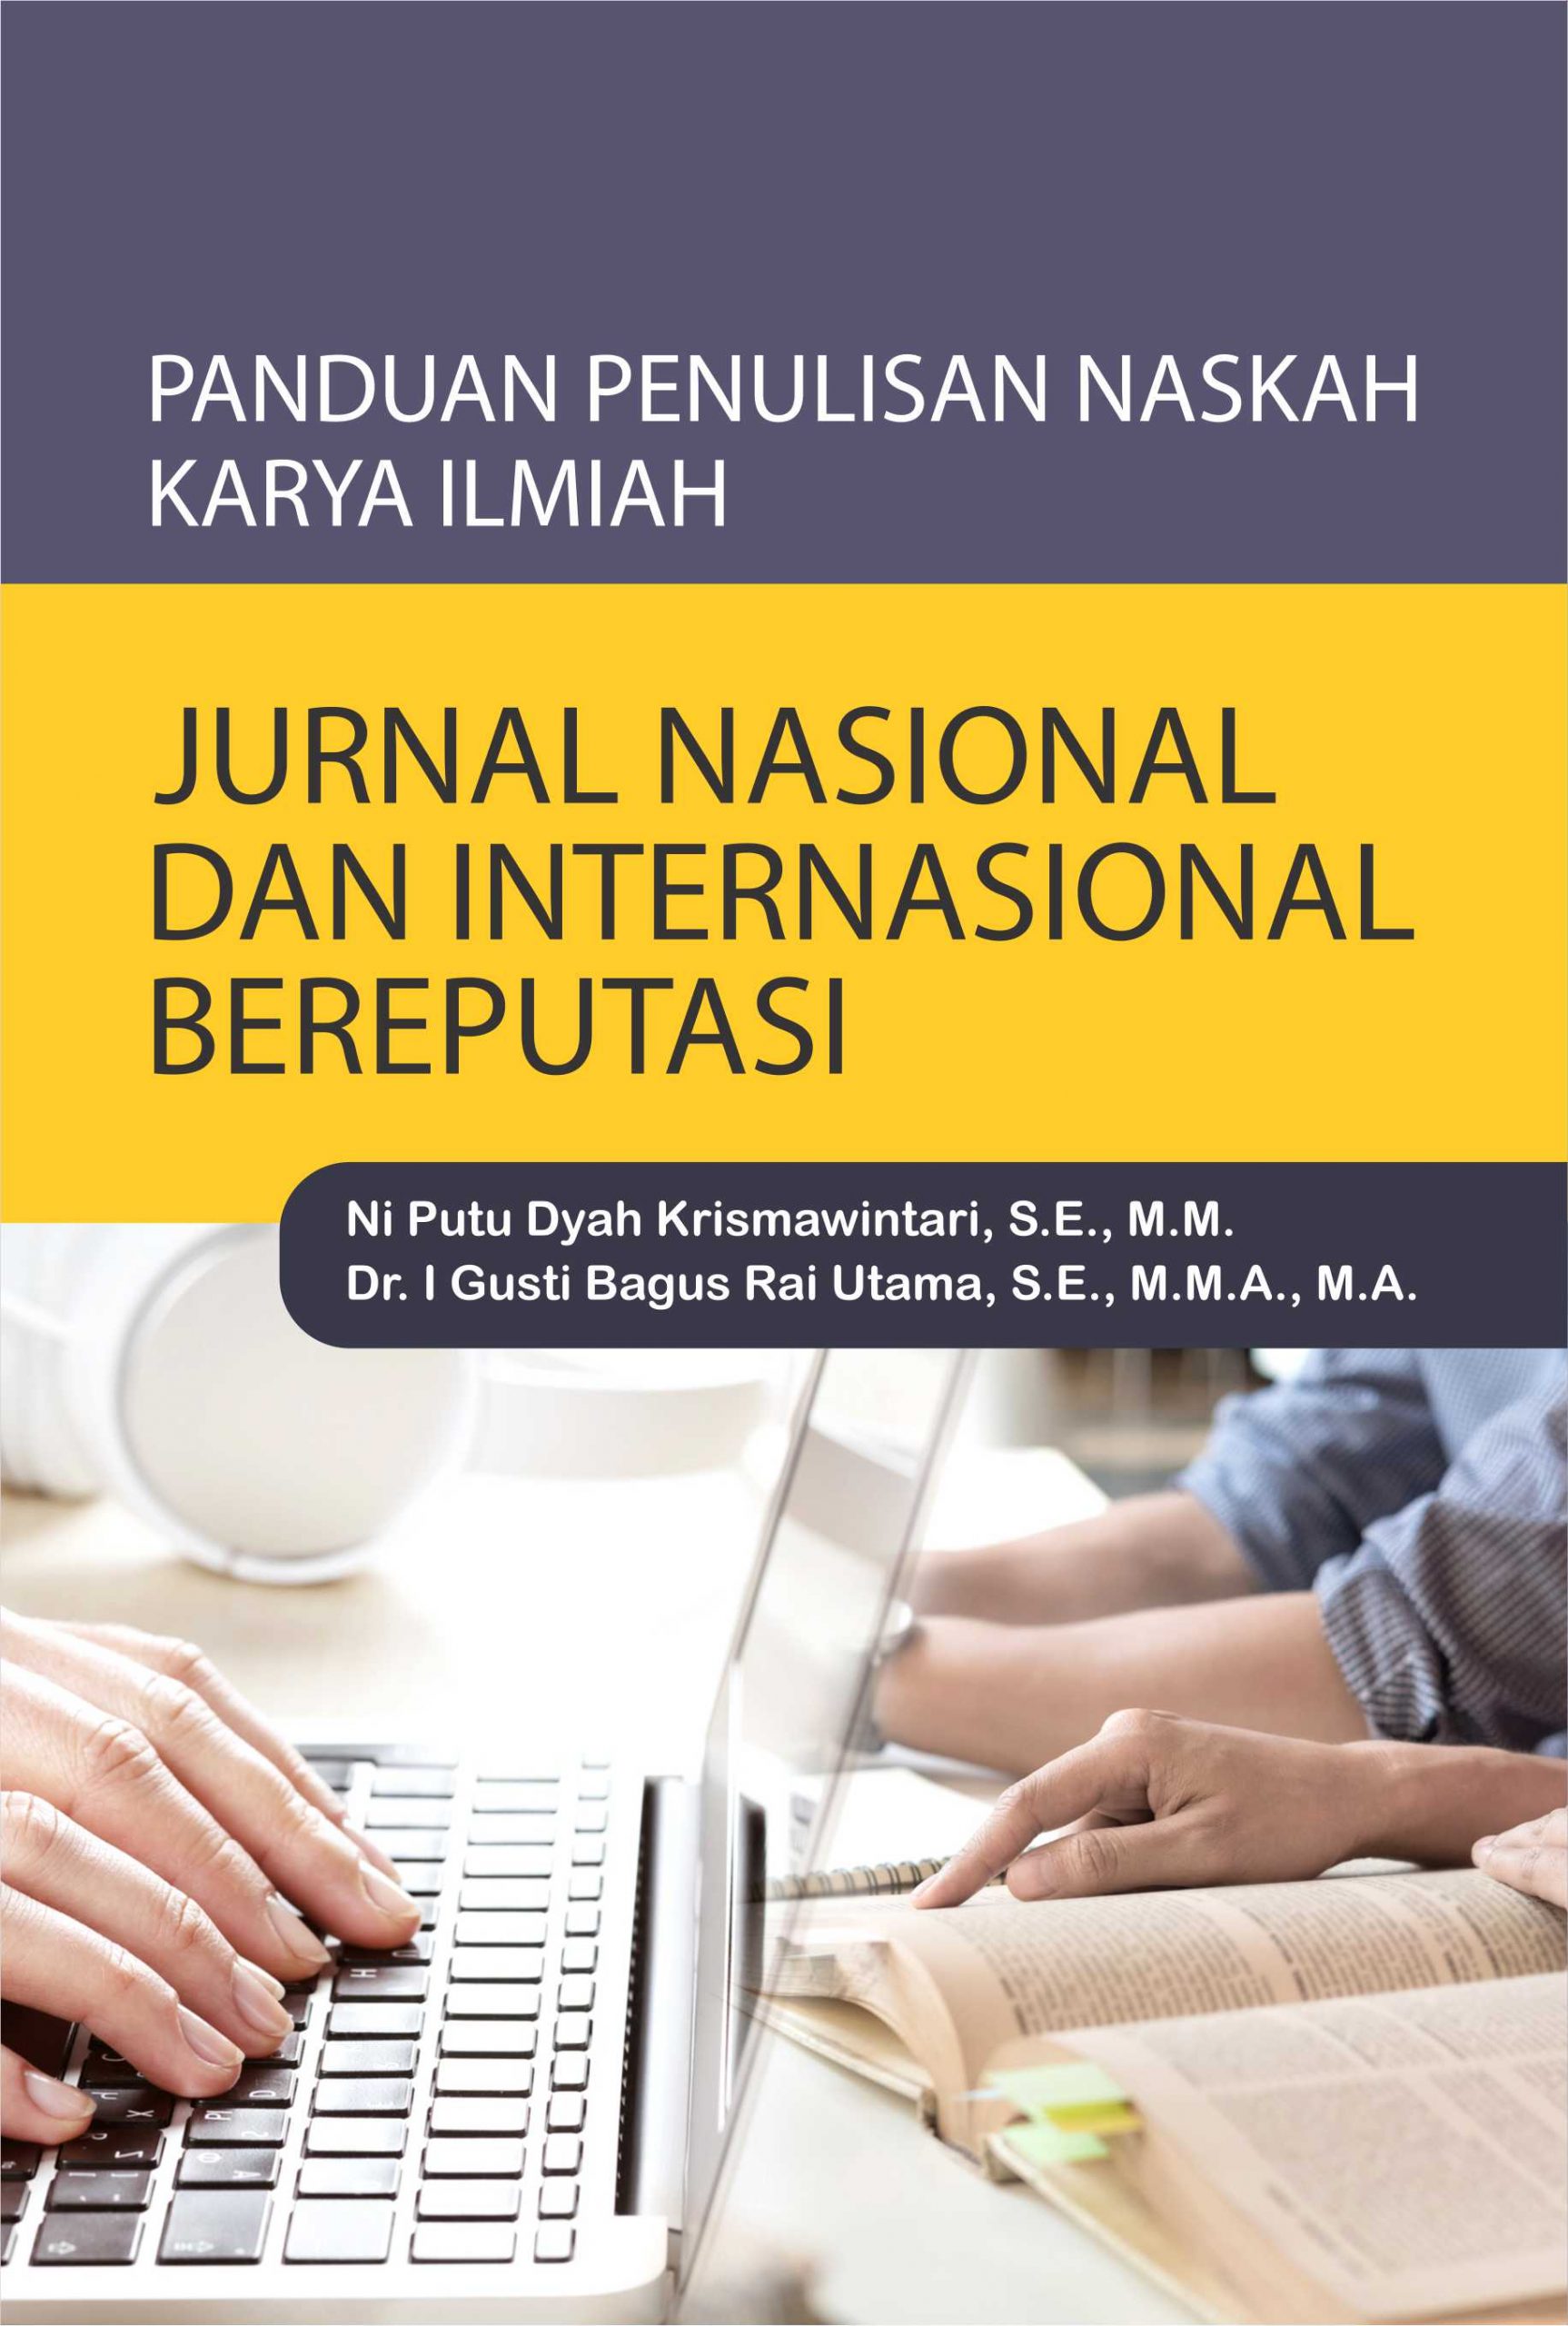 Buku Panduan Penulisan Naskah Karya Ilmiah Jurnal Nasional